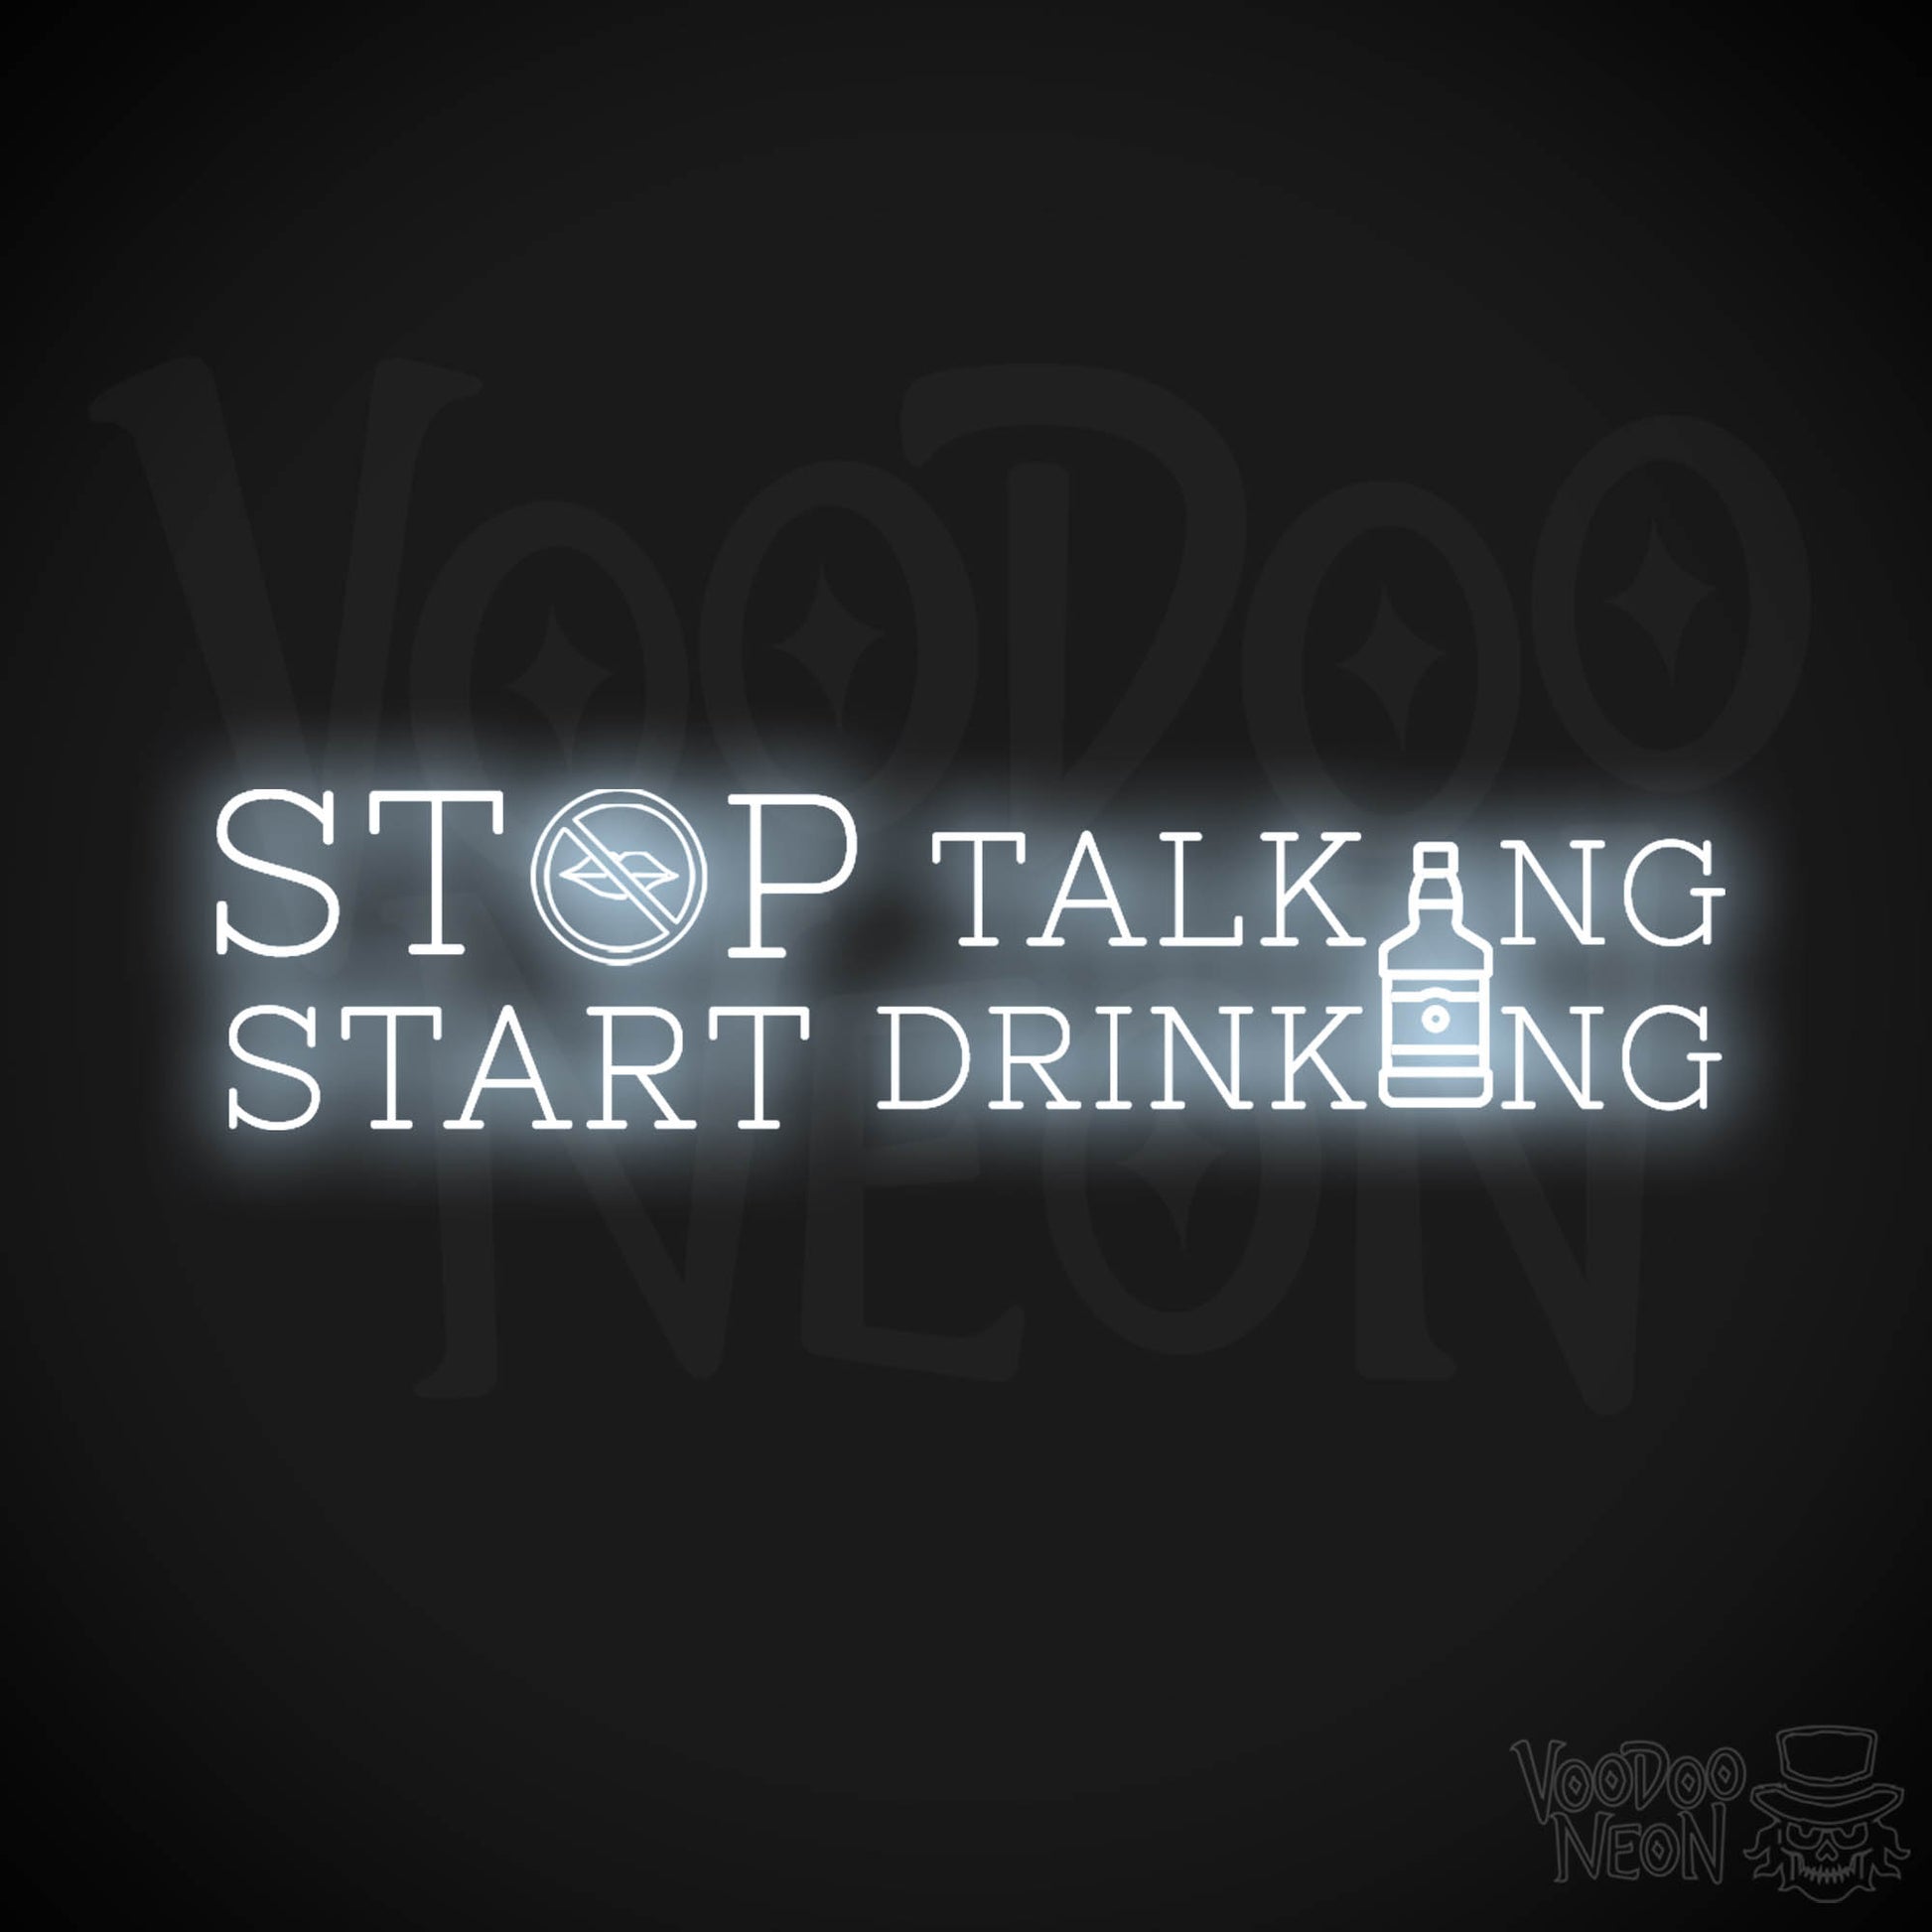 Stop Talking Start Drinking Neon Sign - Stop Talking Start Drinking Sign - Color Cool White